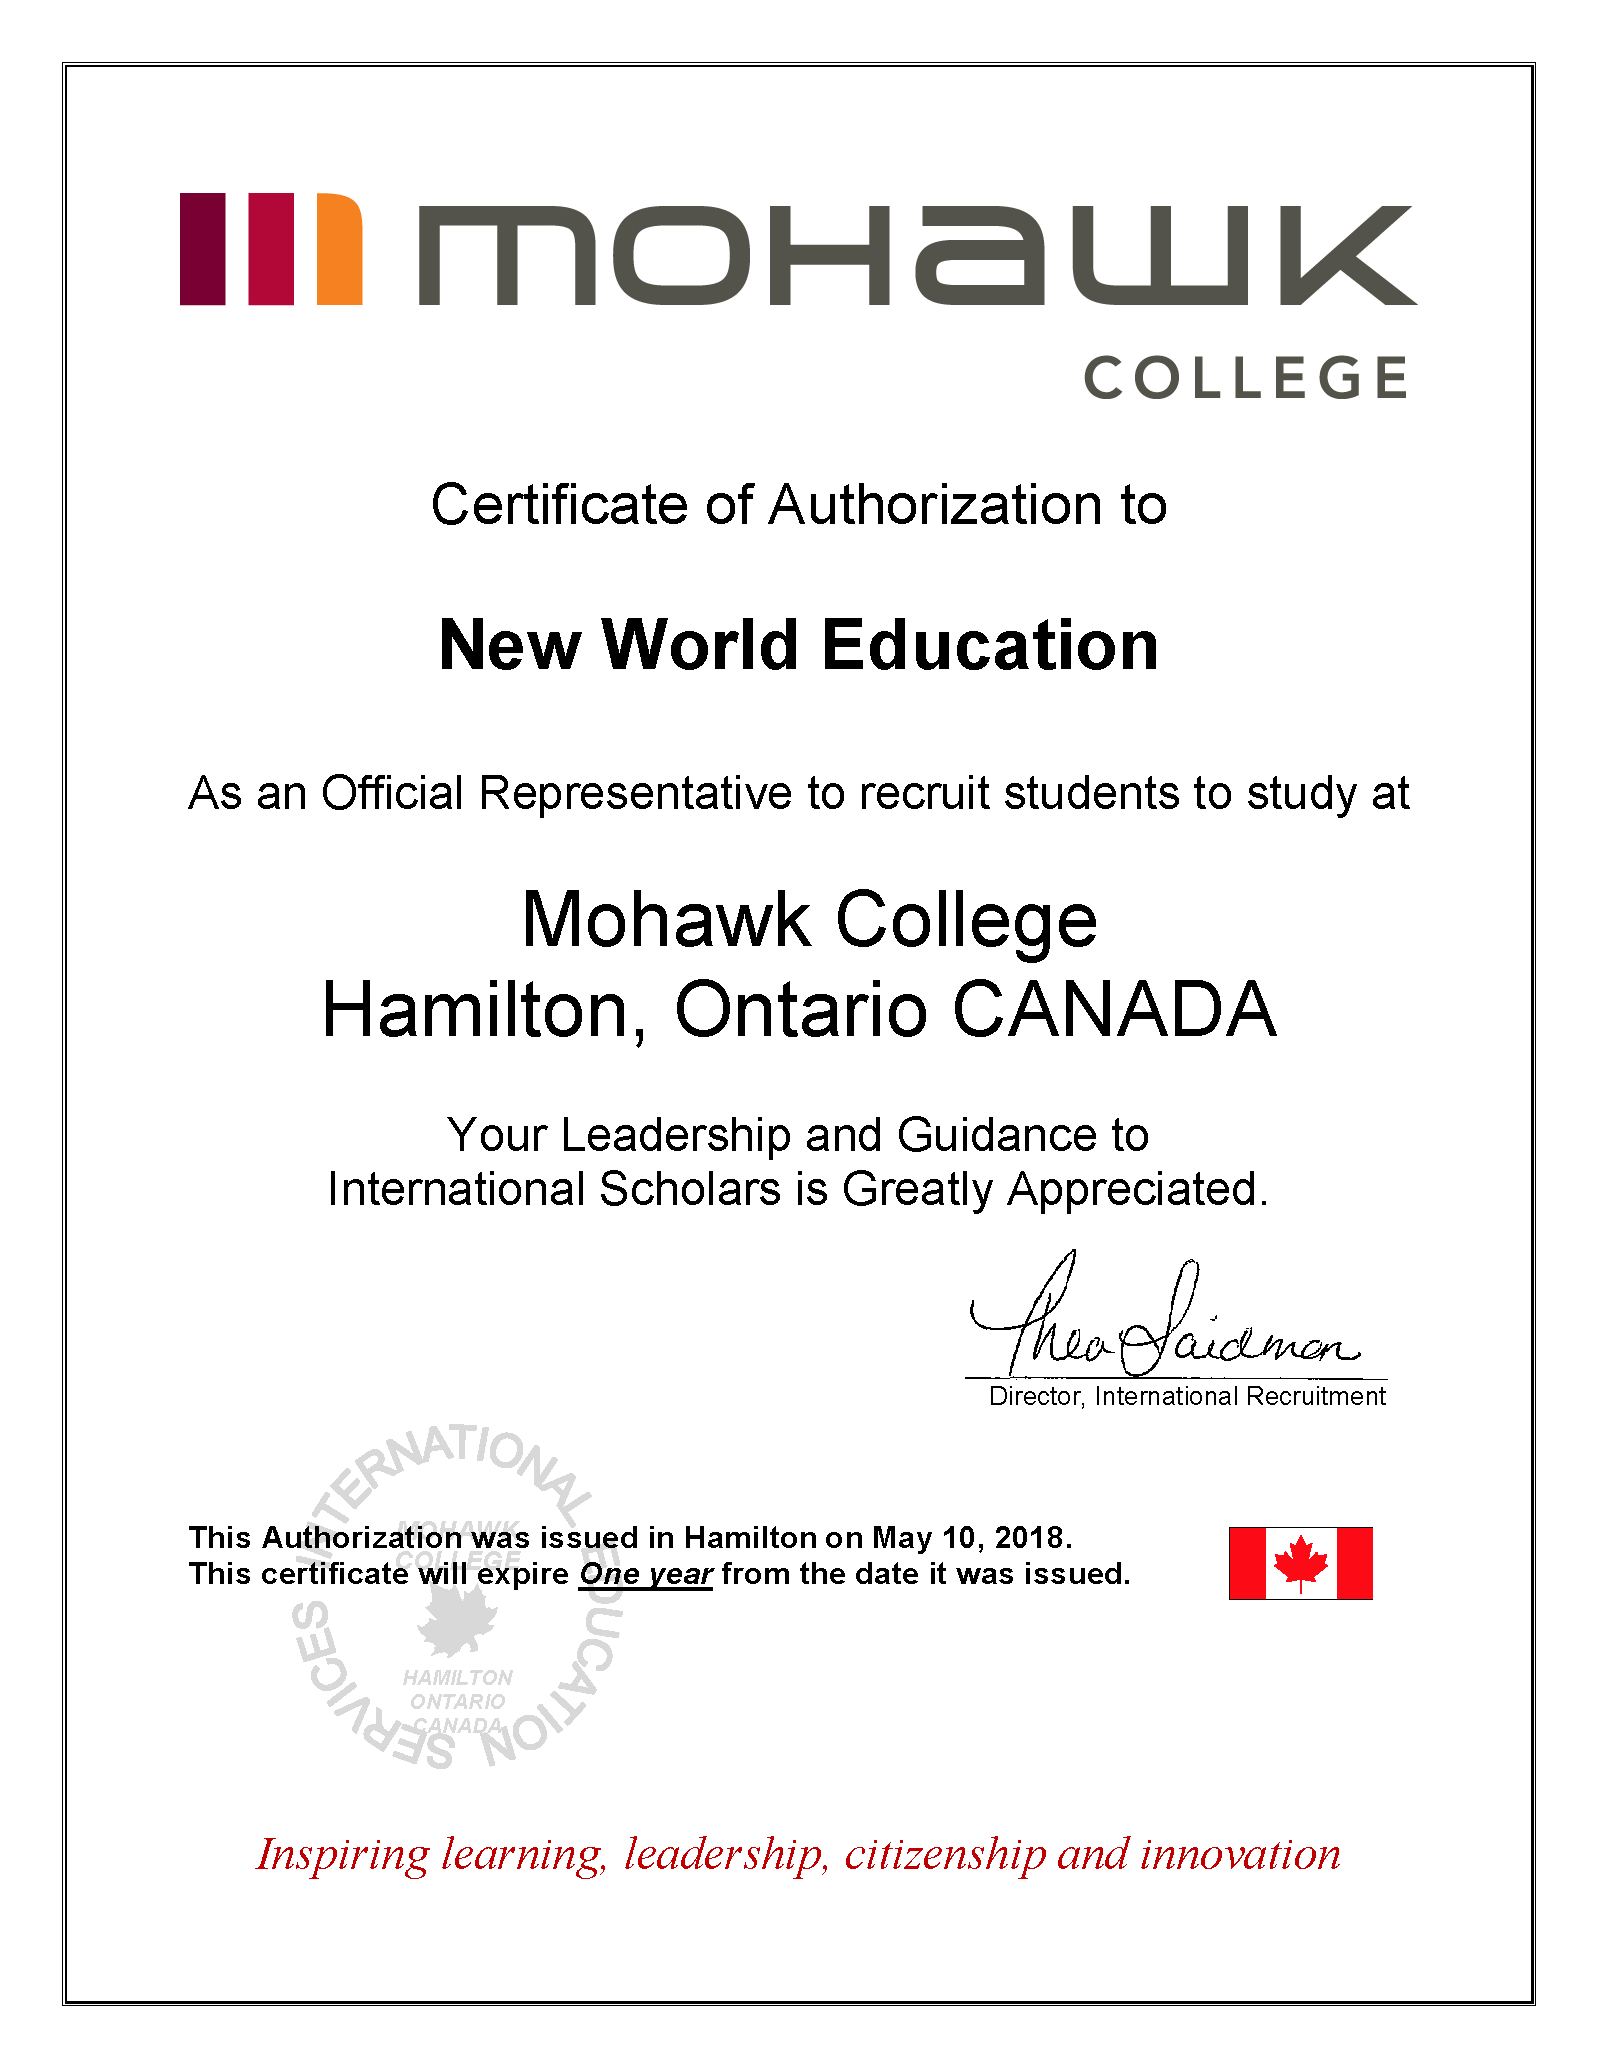 Mohawk College - Hamilton, Ontario, Canada